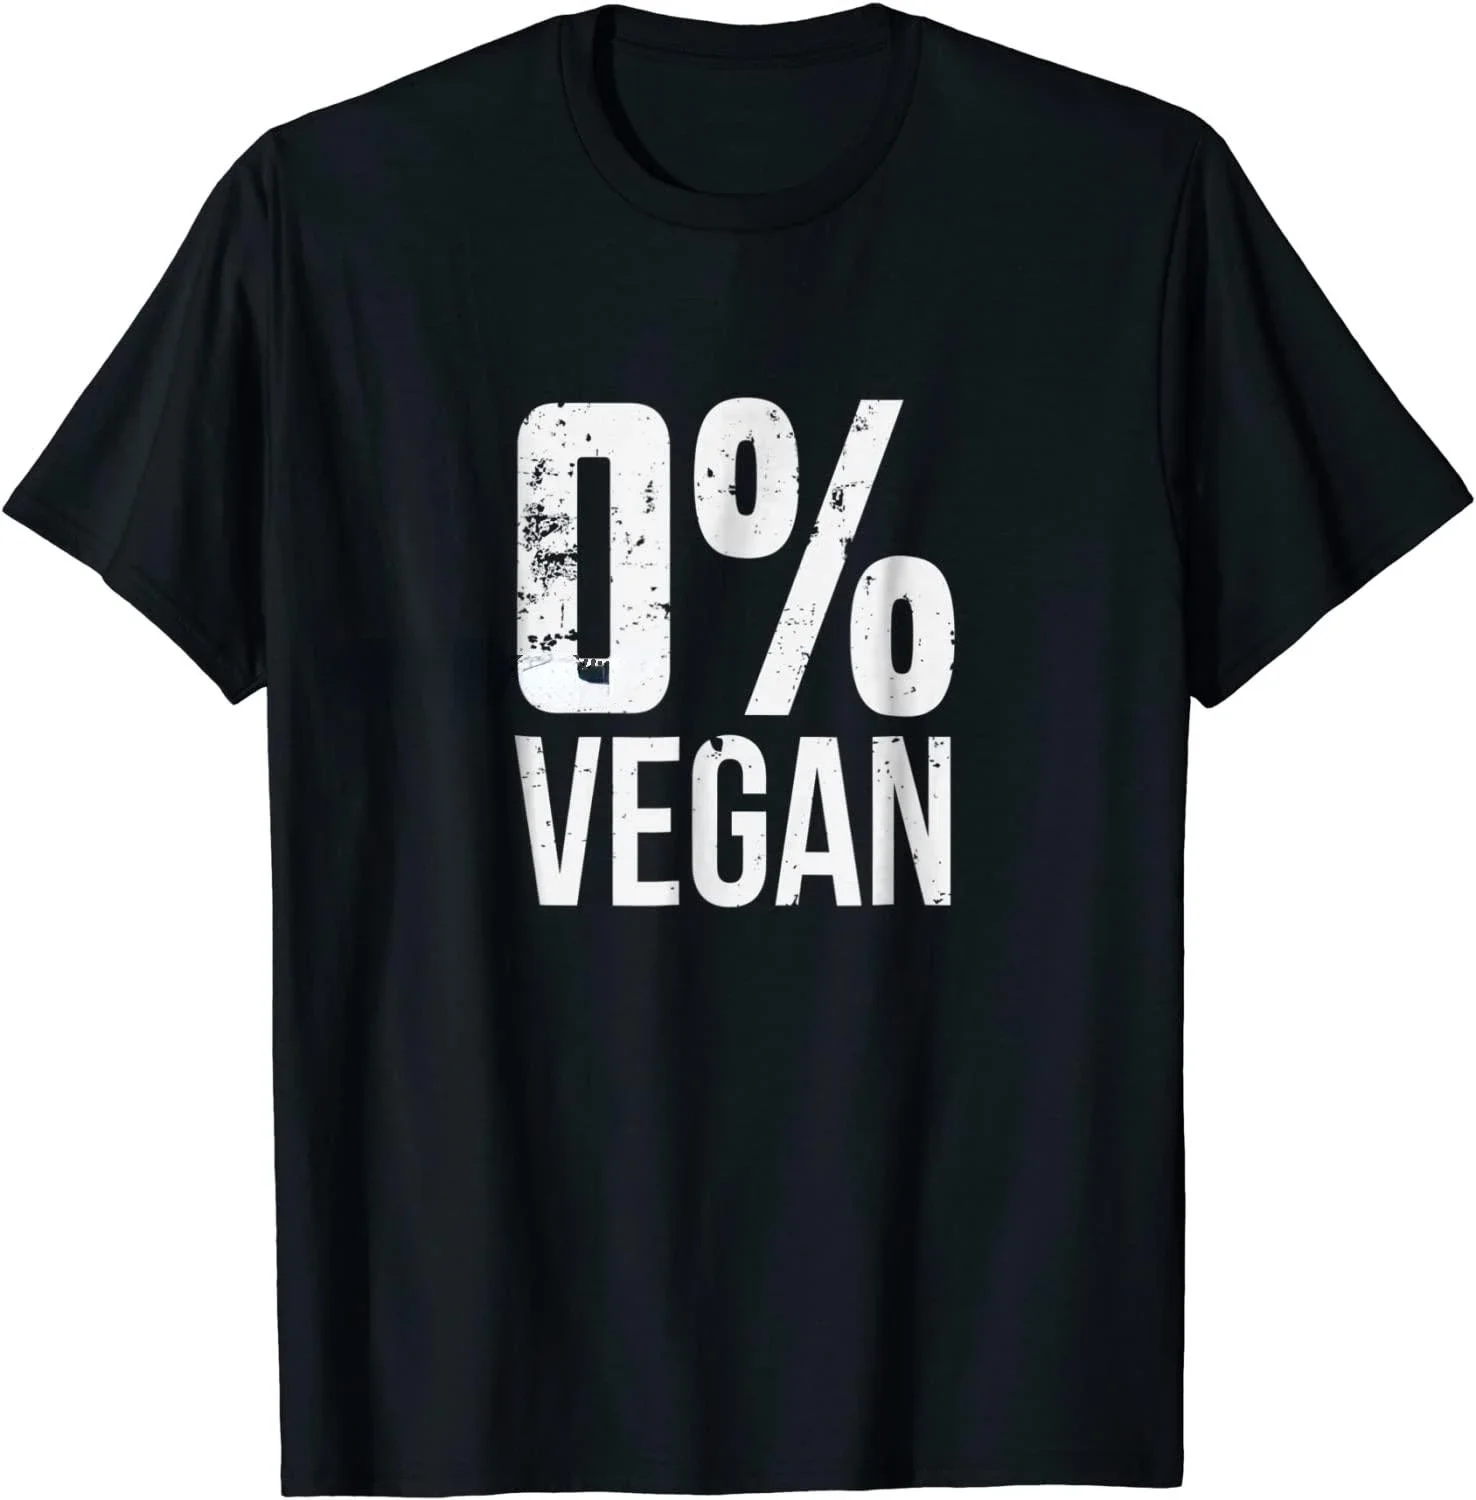 

Zero Percent Vegan Funny BBQ Carnivore Meat Eater T-Shirt Top T-shirts for Men Printing Tops Shirts humor clothing